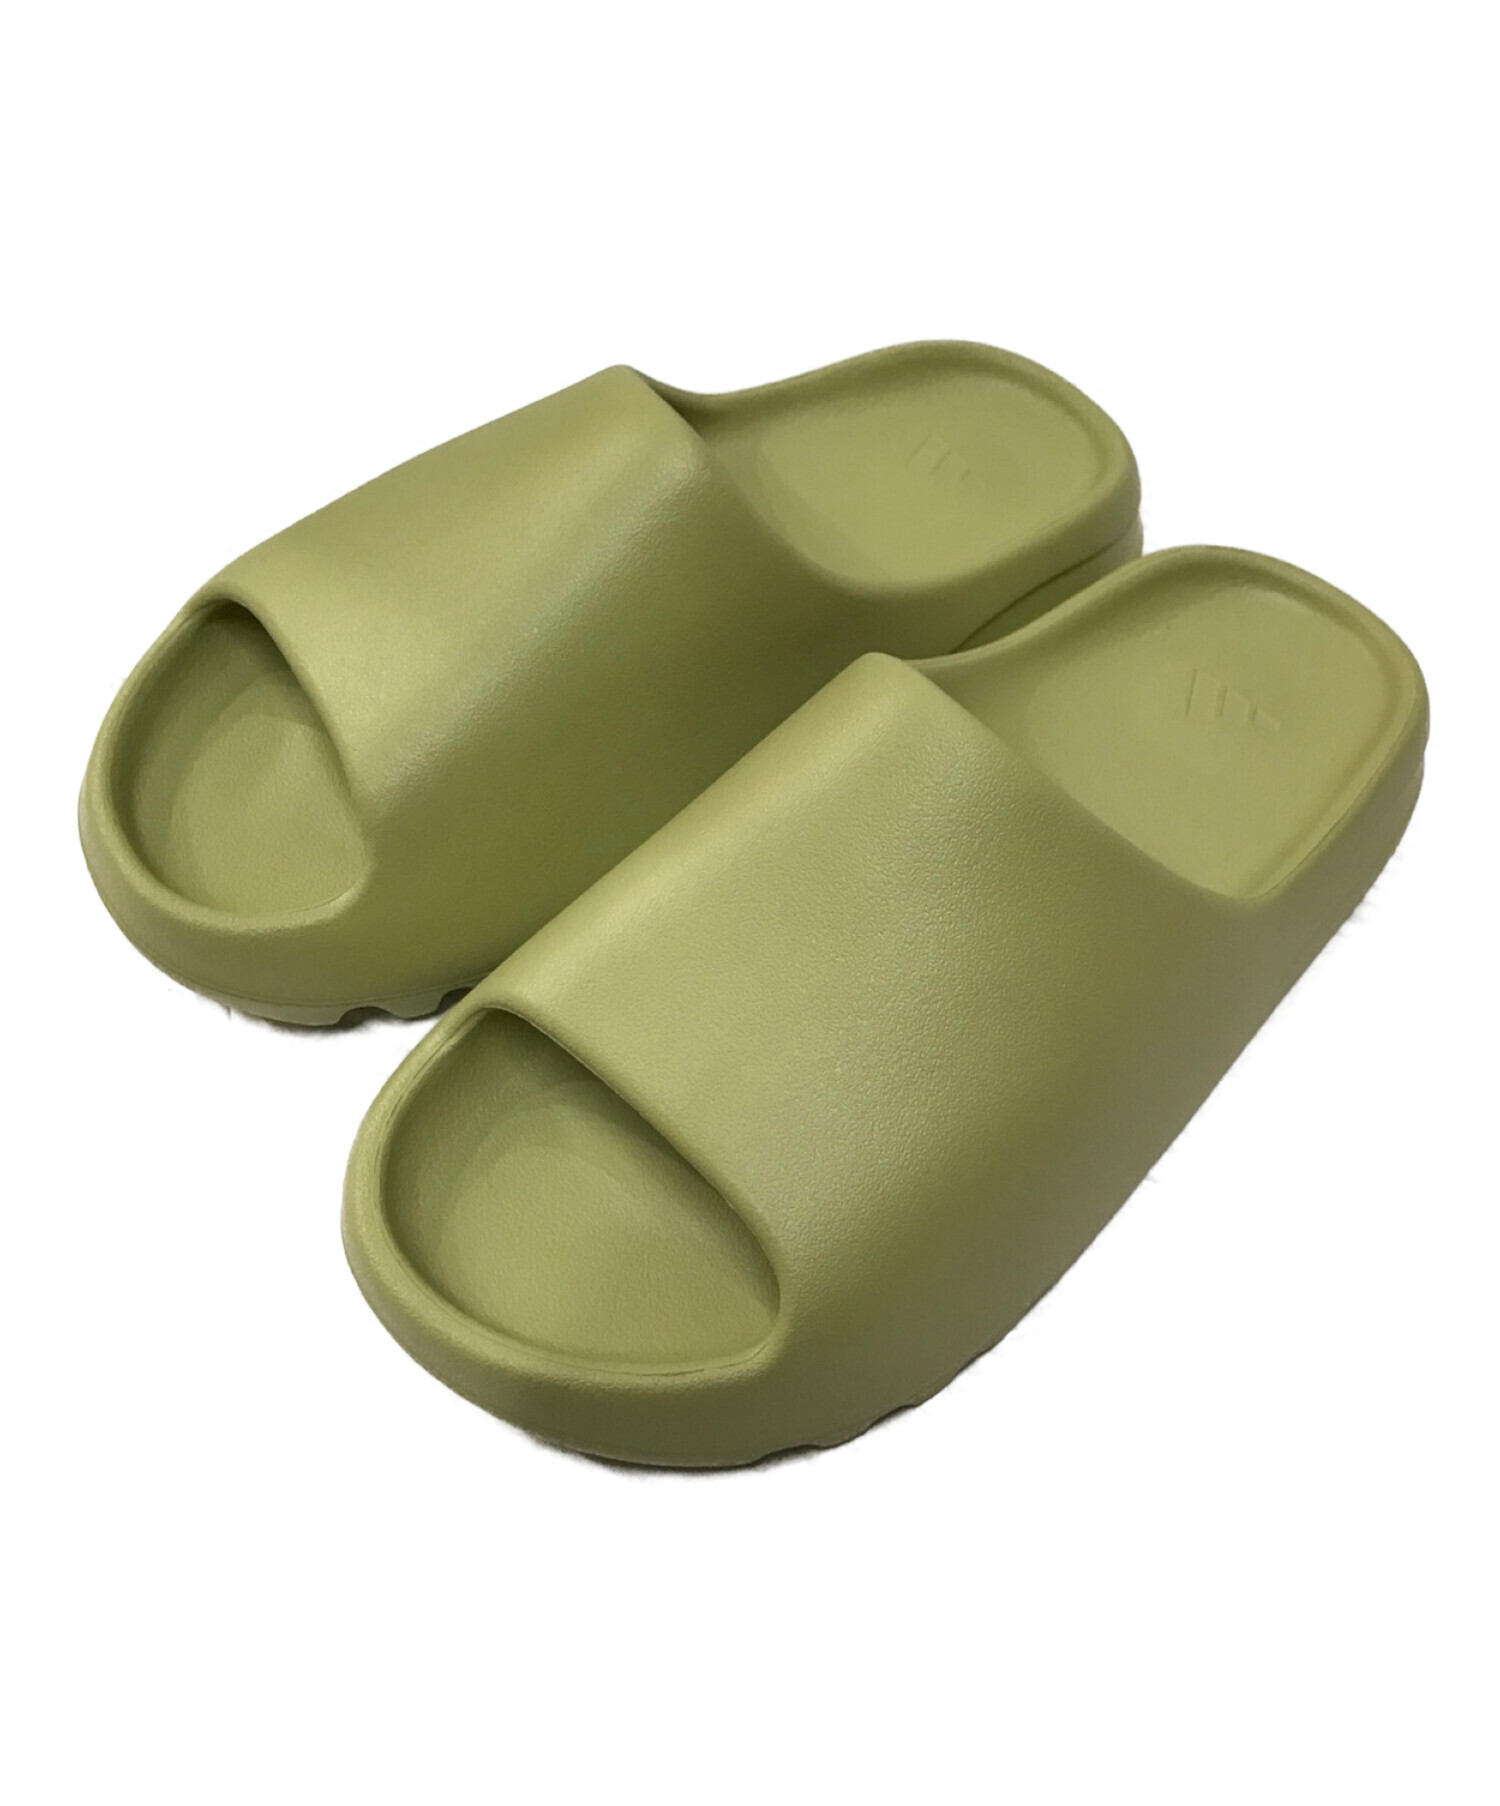 adidas YEEZY (アディダス イージー) Slide Resin 黄緑 サイズ:275